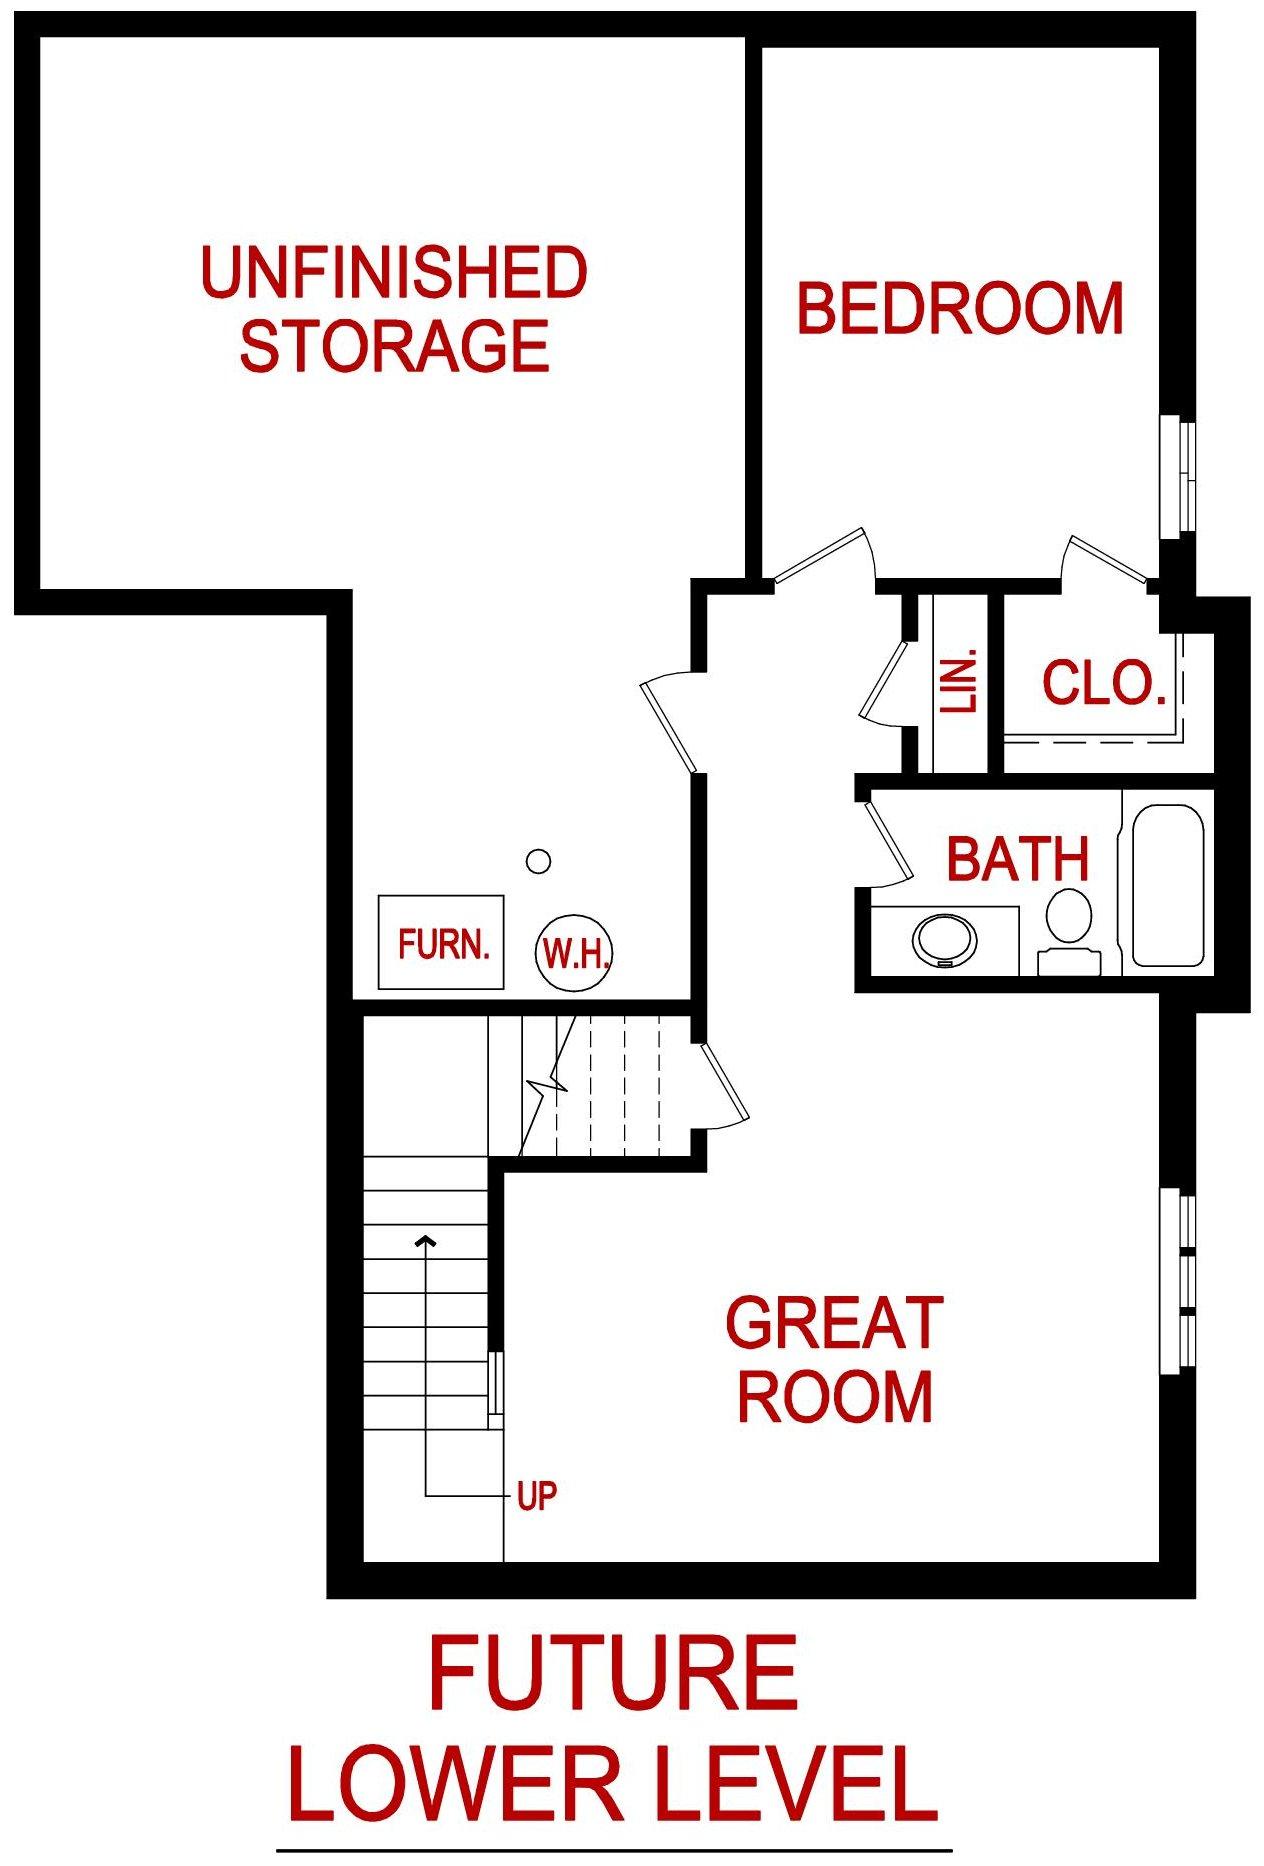 Lower level floor plan of 6422 W. 79th Ter. Prairie Village, KS from Lambie custom homes